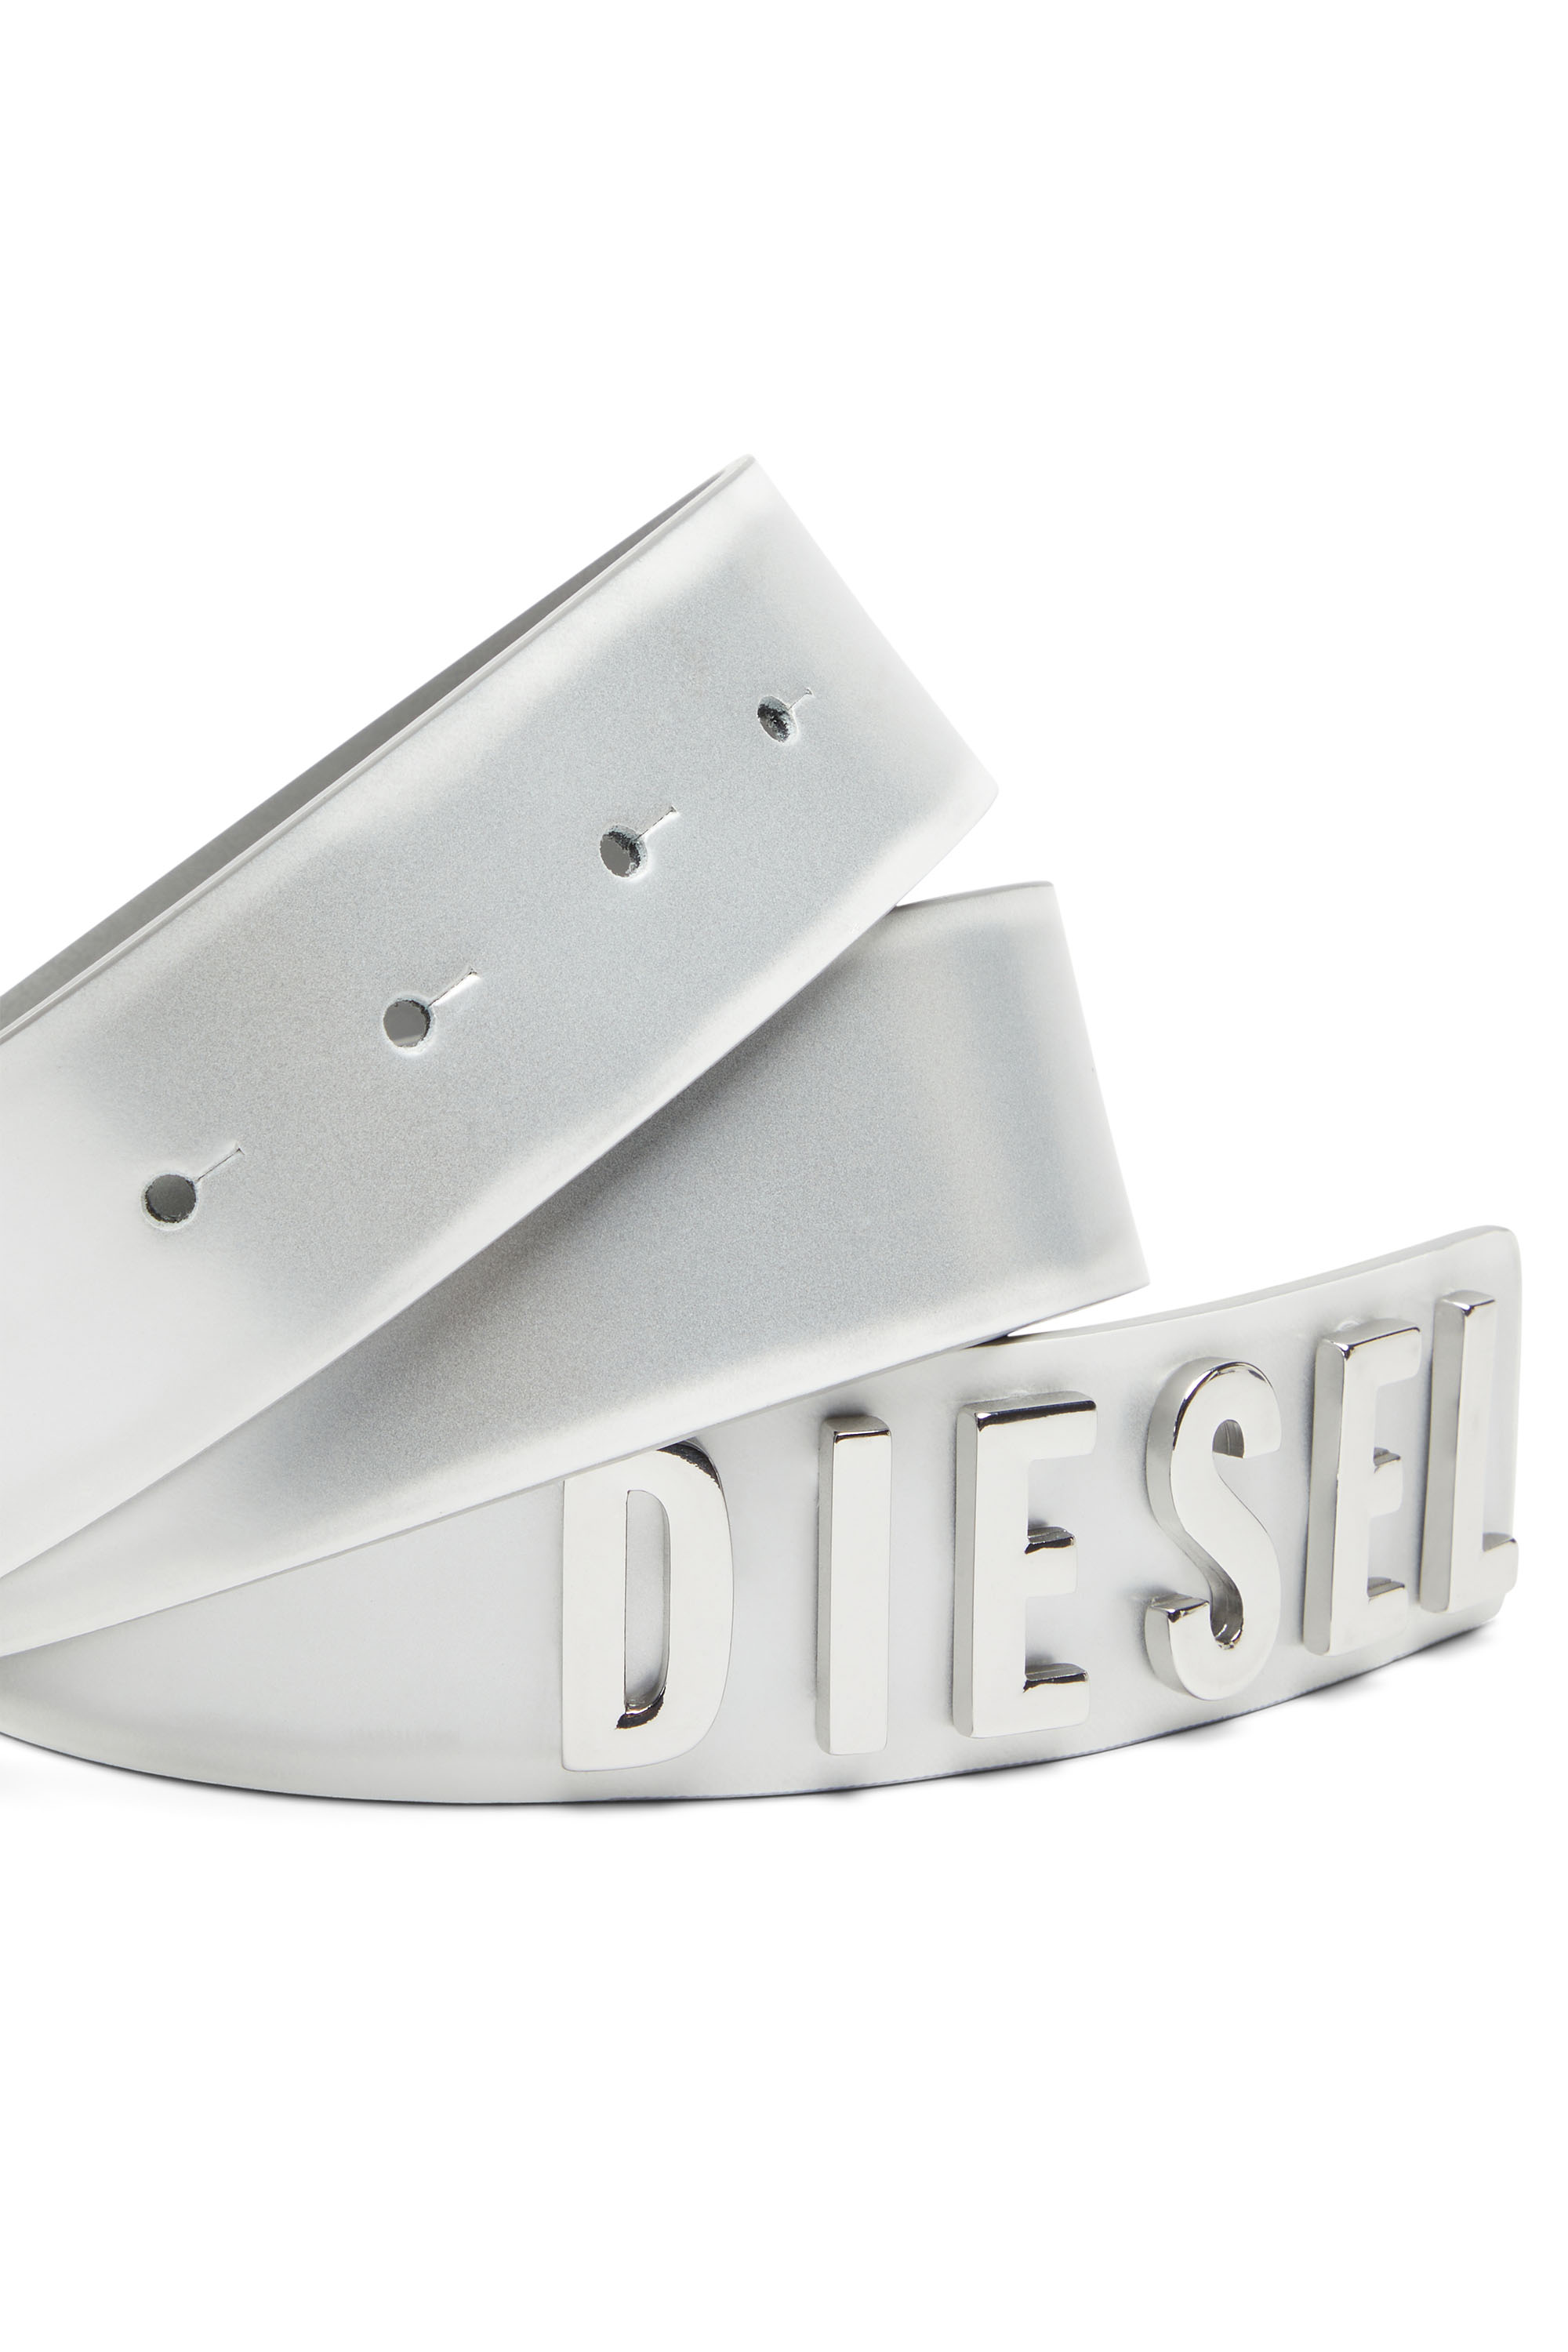 Diesel - B-LETTERS D, White - Image 3